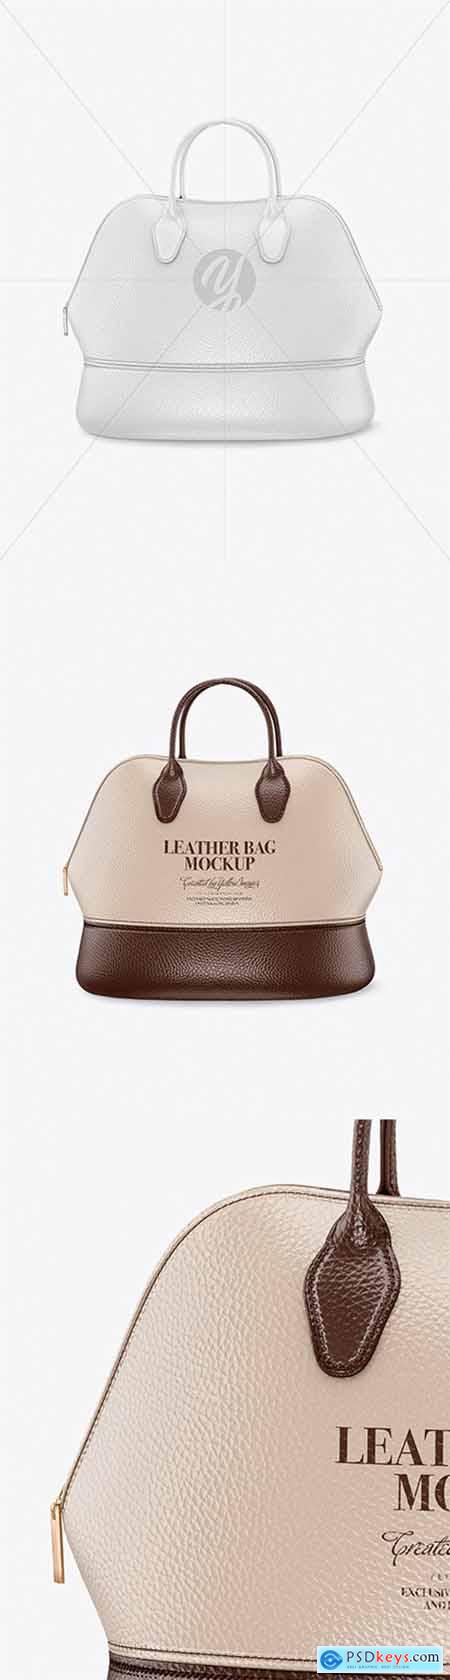 Leather Bag Mockup 60779